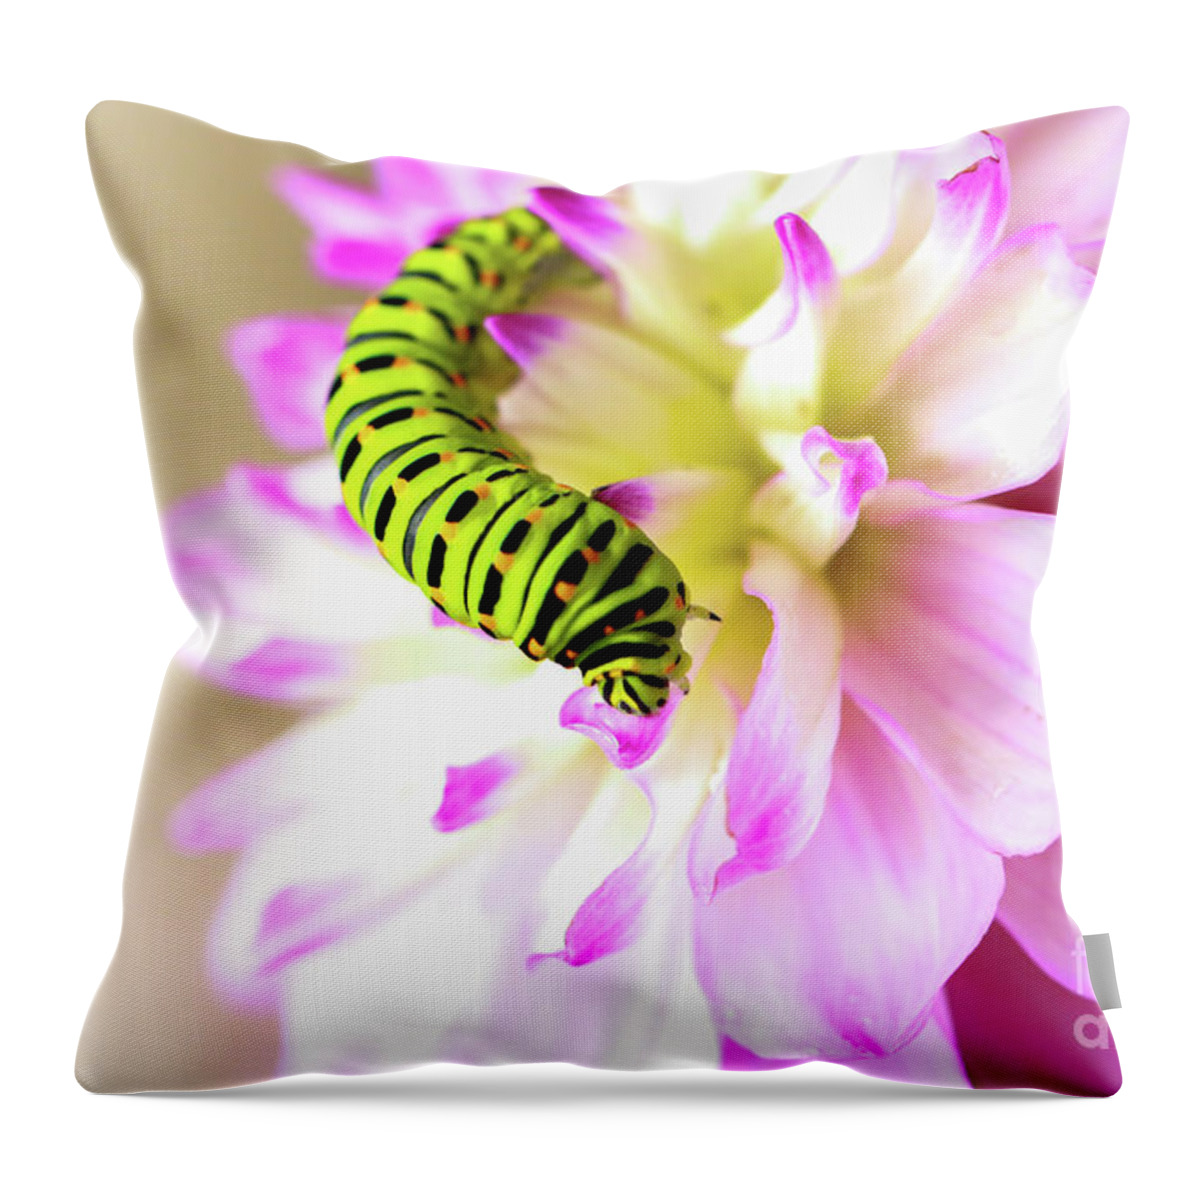 Dahlia Throw Pillow featuring the photograph Dahlia with Caterpillar by Amanda Mohler